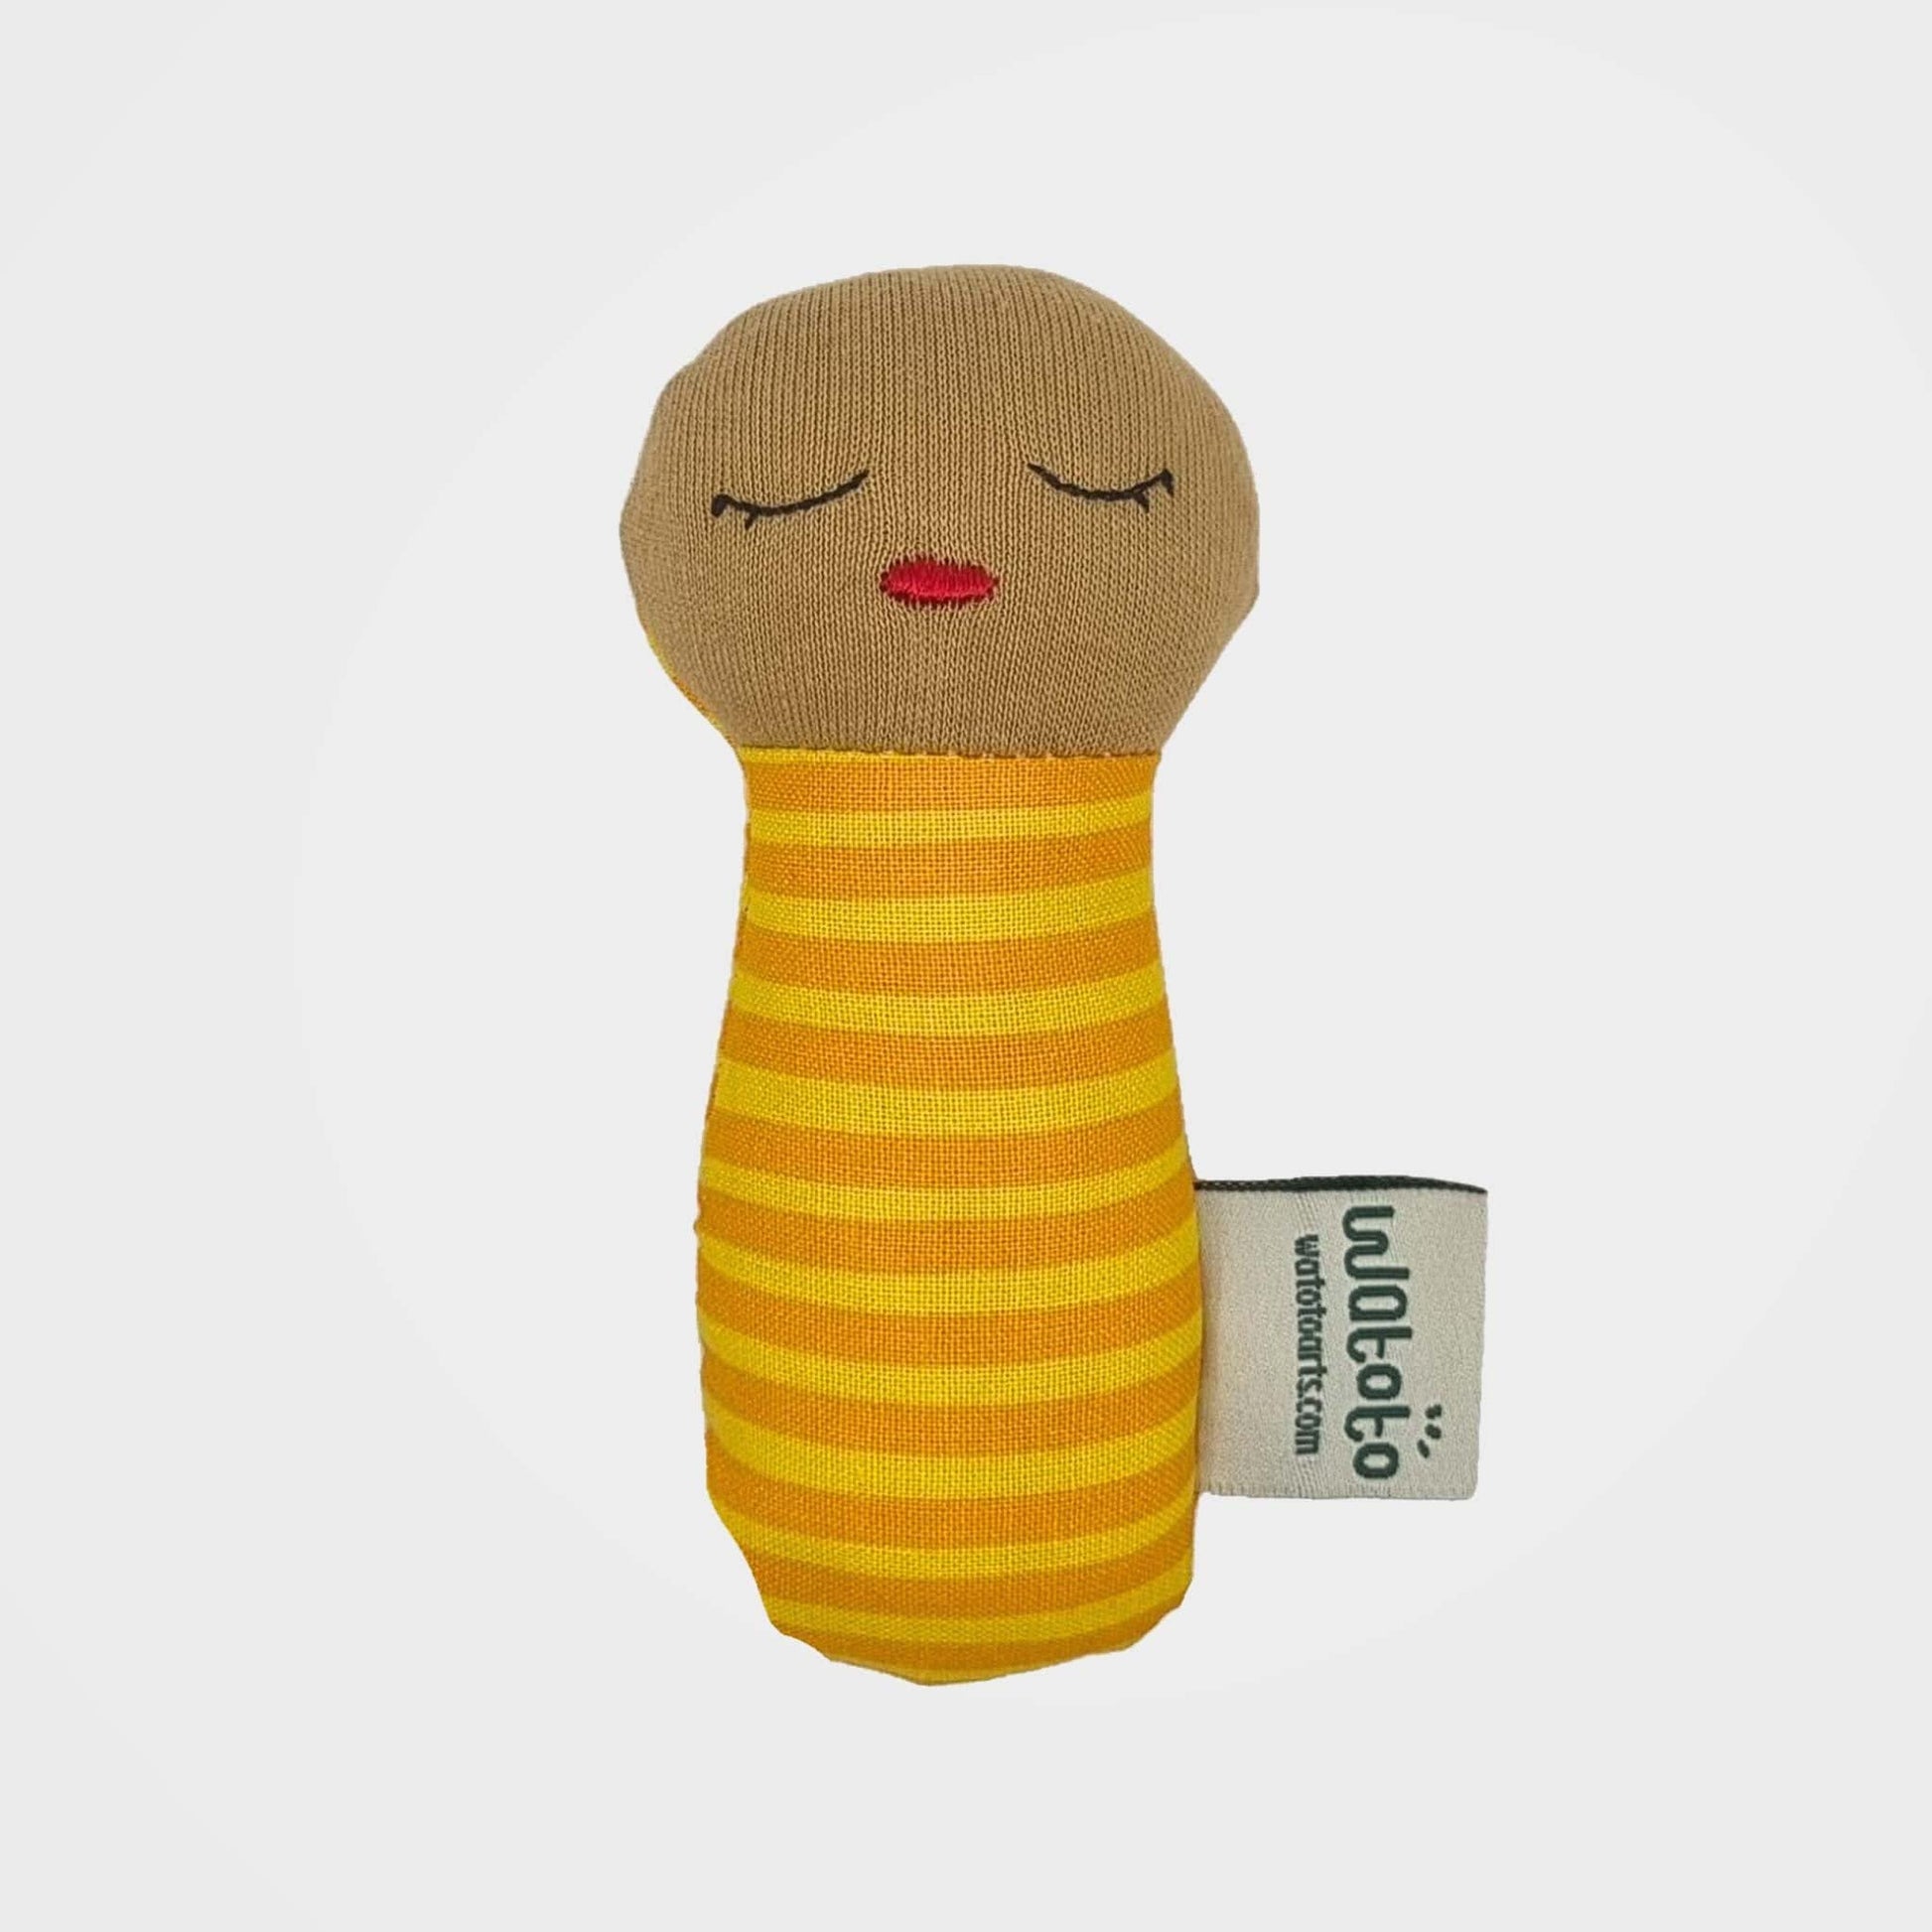 Inclusive, Handmade Pocket-Sized Doll